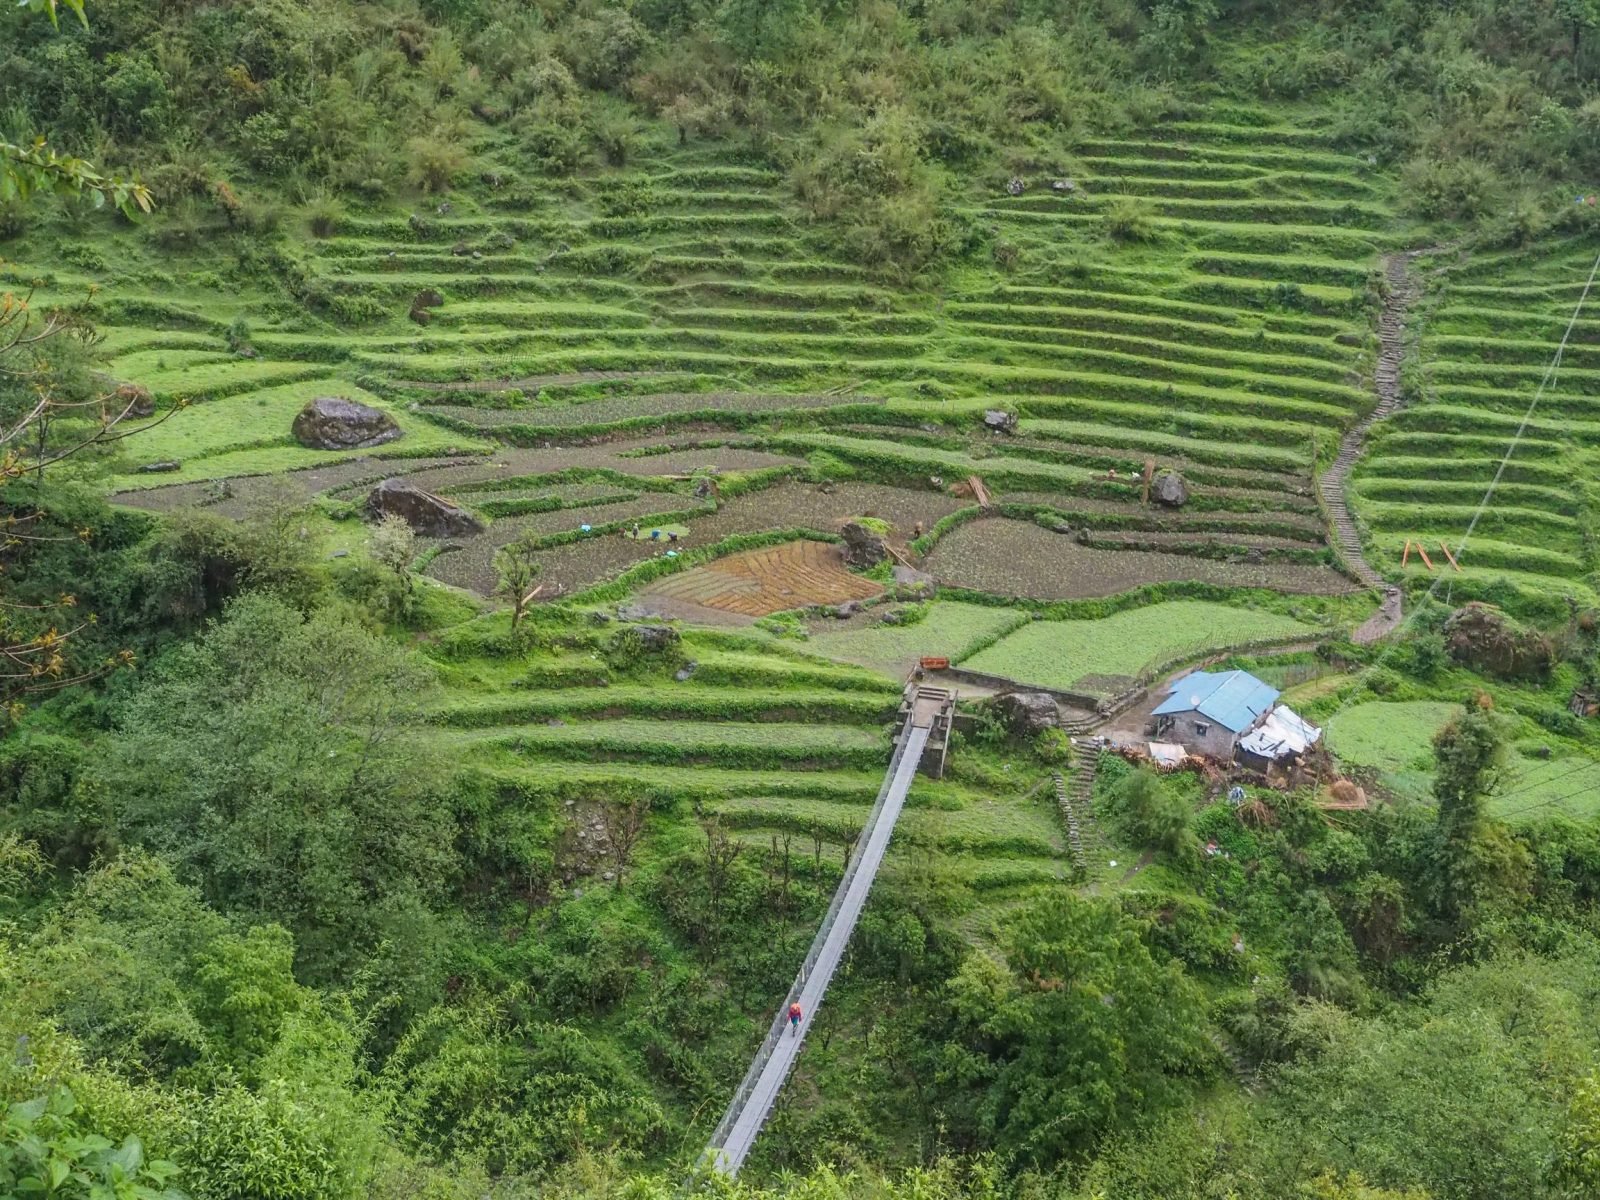 Farm Land on the Annapurna Circuit trek.